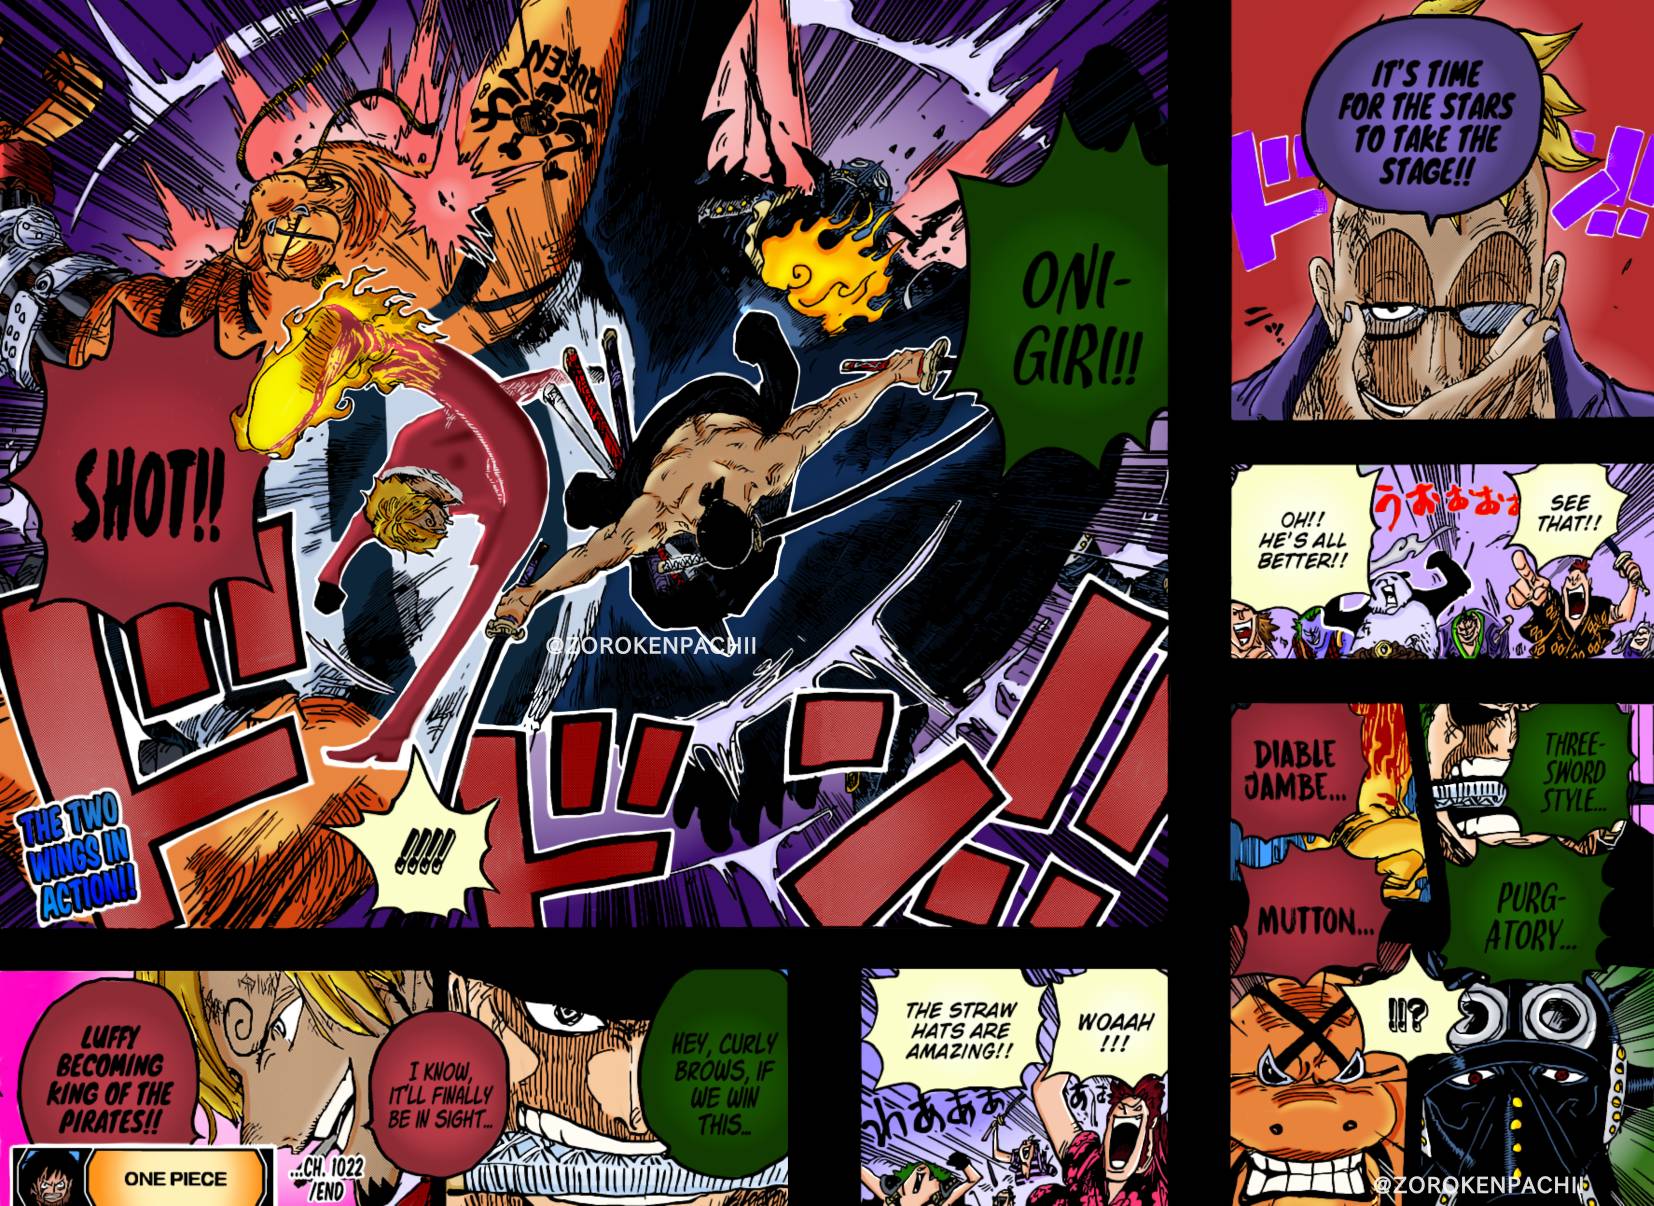 Zoro & Sanji Finally Team Up / One Piece Chapter 1022 Spoilers 